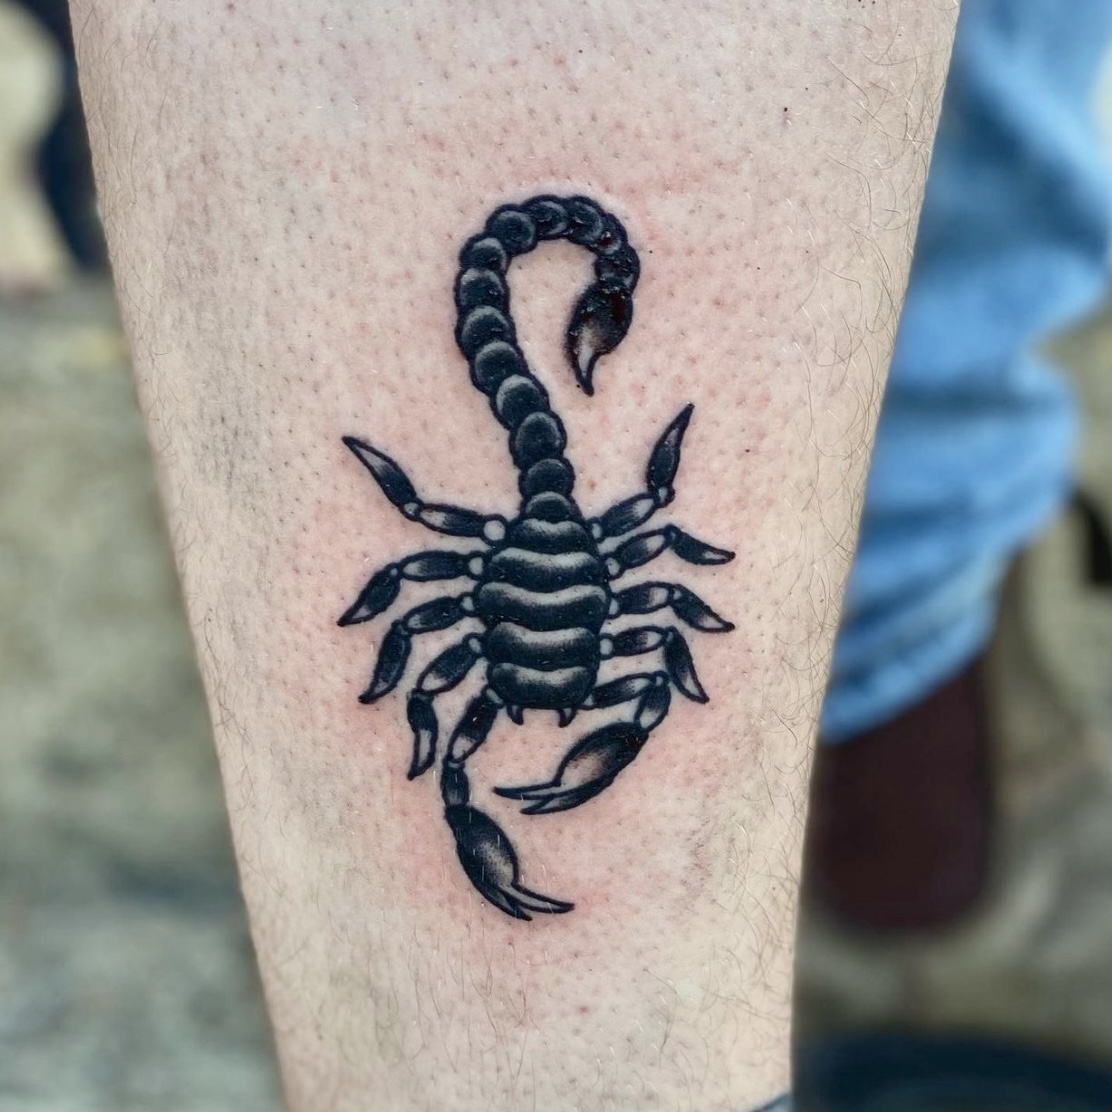 Tattoo of a scorpion from best tattoo shops in dallas